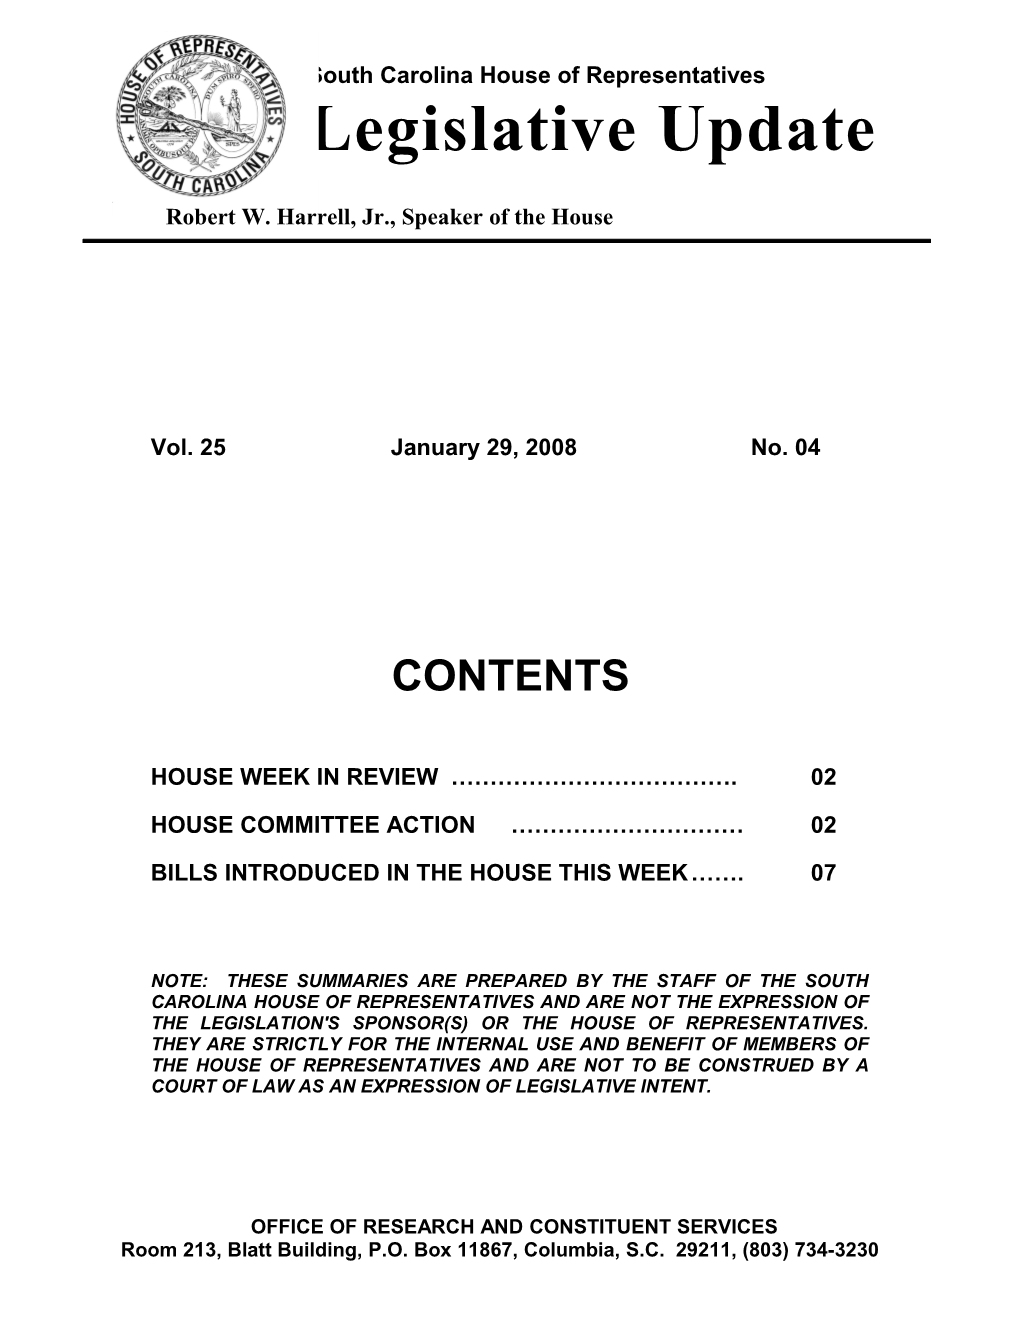 Legislative Update - Vol. 25 No. 04 January 29, 2008 - South Carolina Legislature Online